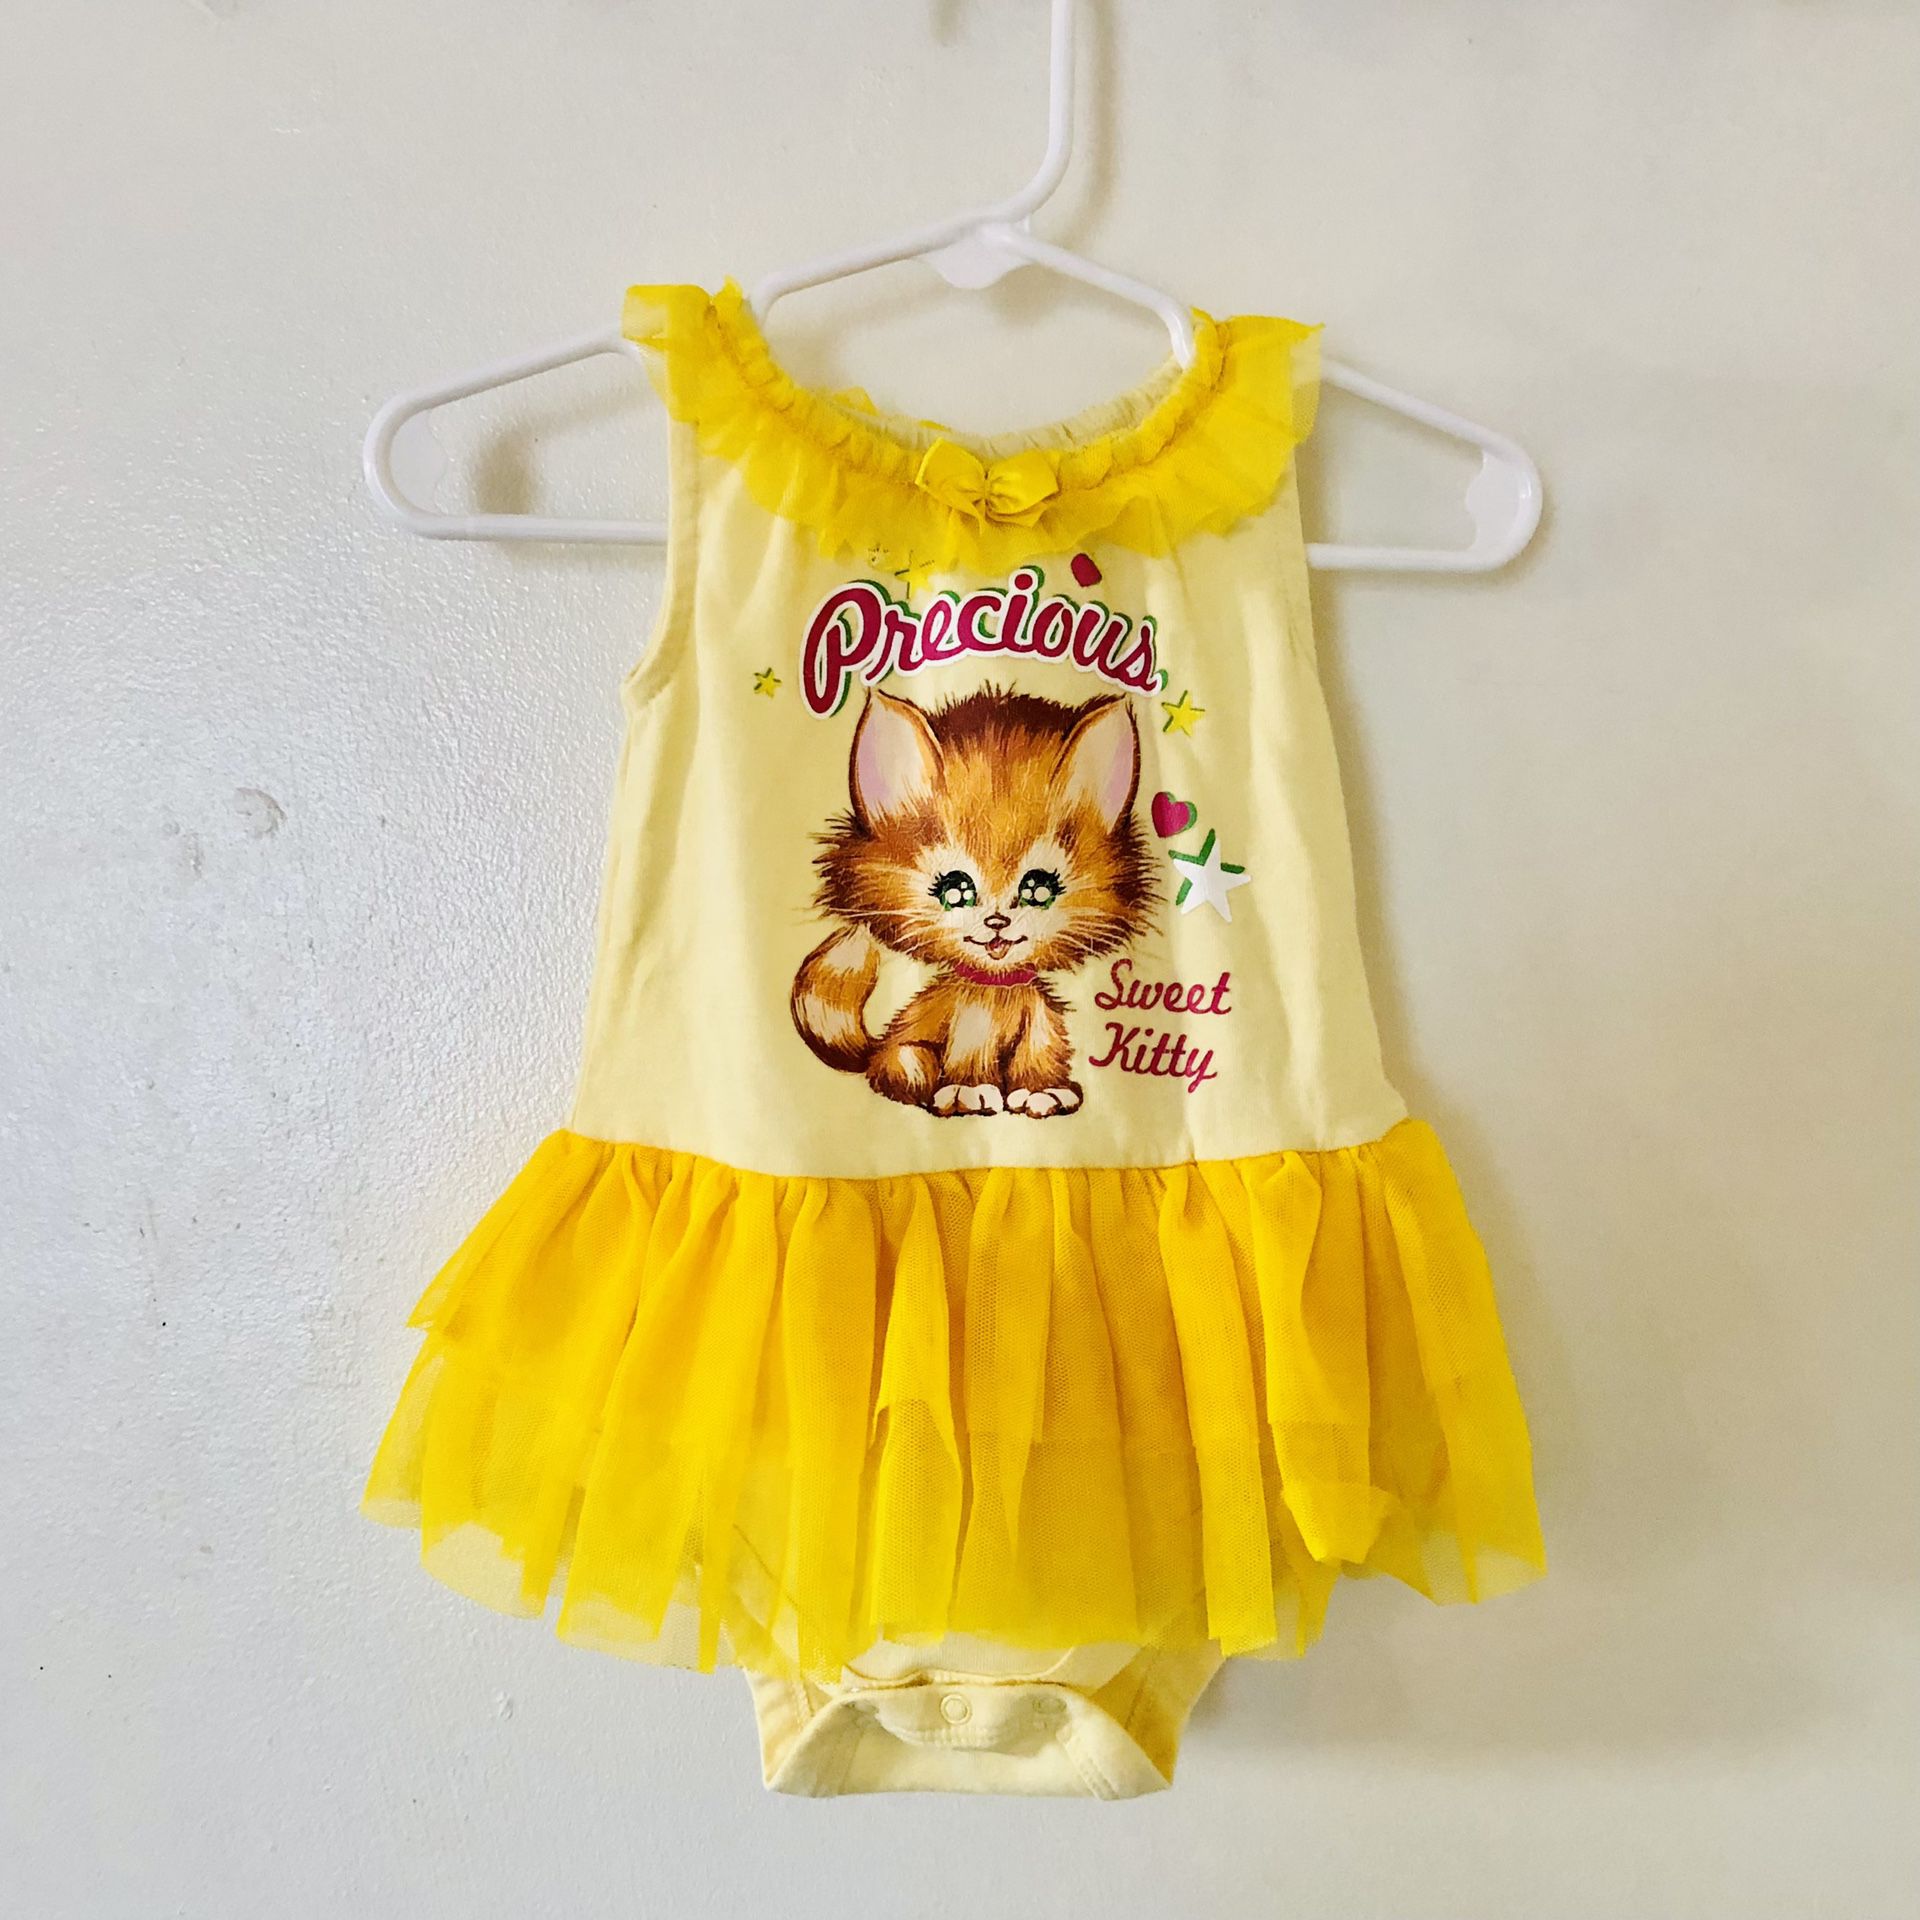 Precious Sweet Kitty Romper Bodysuit Baby Girls Clothes 3-6 Month Tutu Skirt Tee